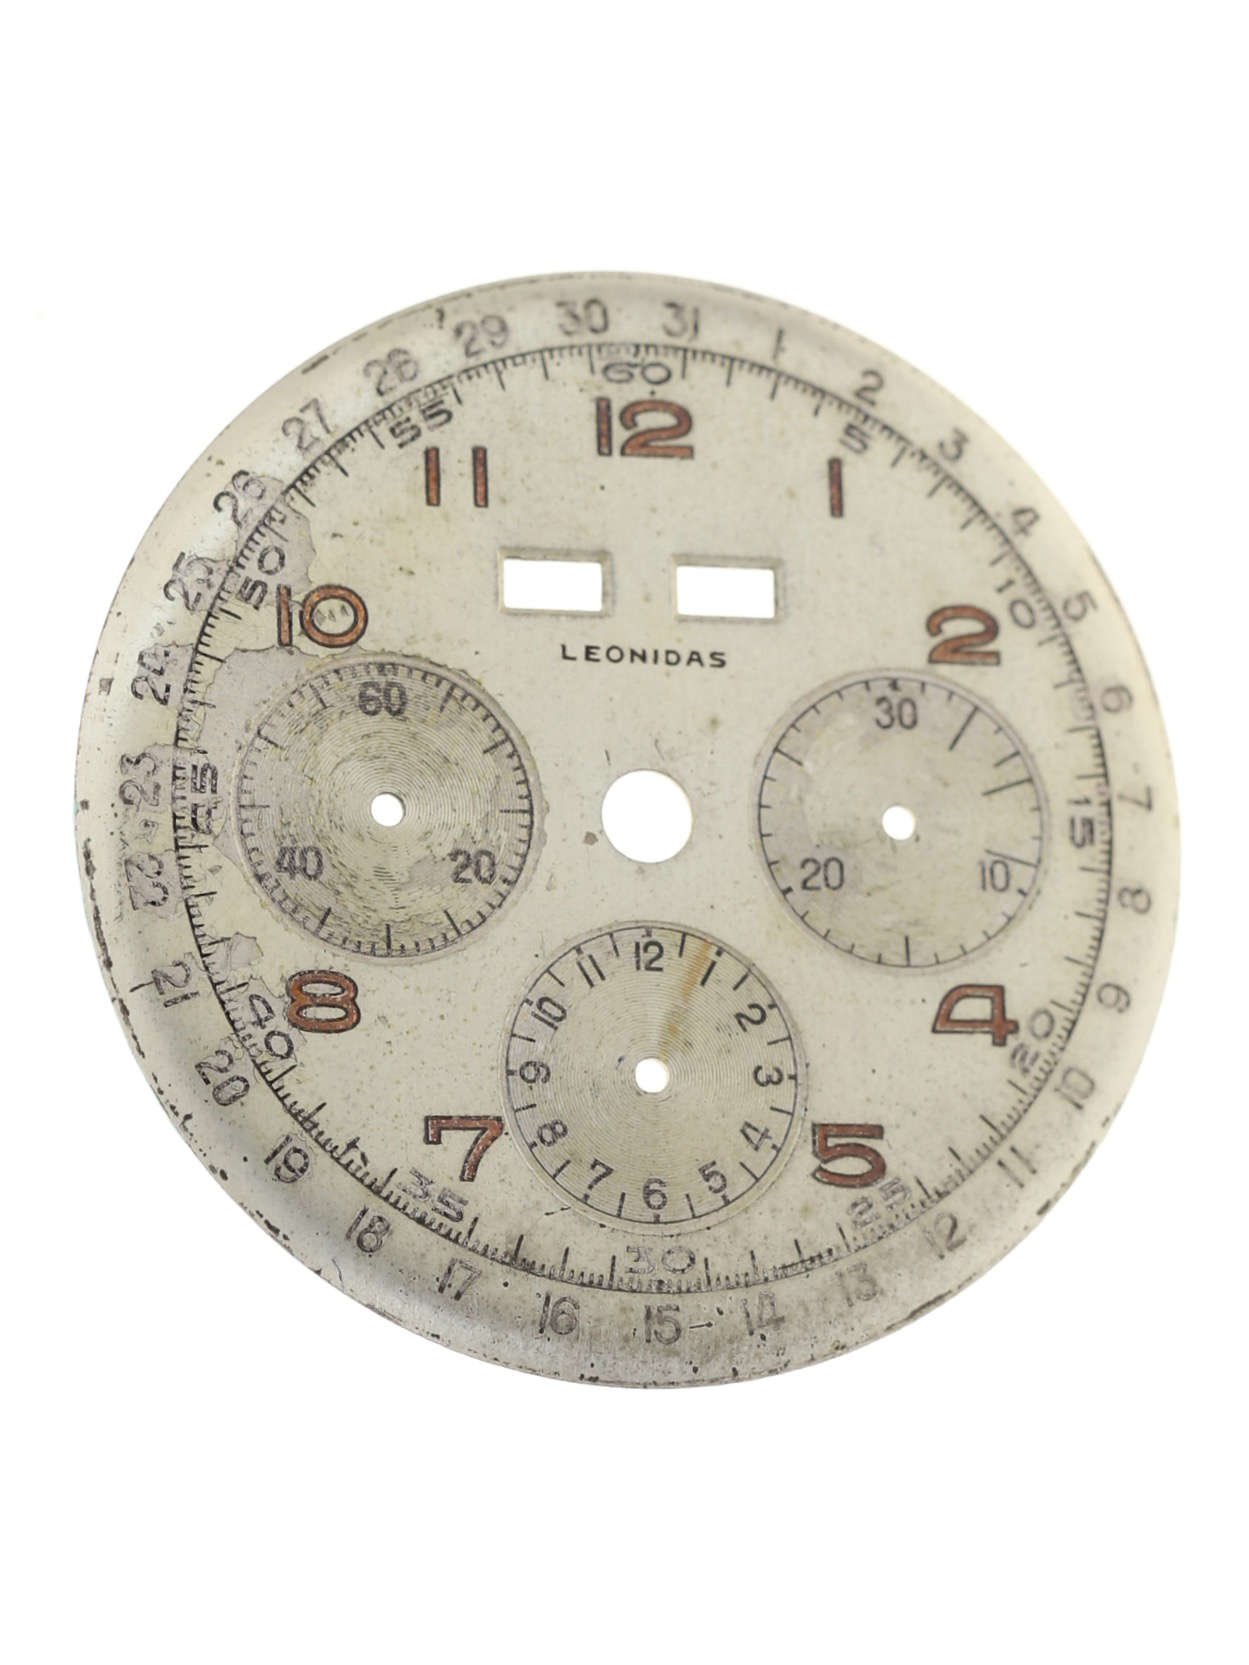 Leonidas Valjoux 72 C Chronograph 1960s - Gisbert A. Joseph Watches